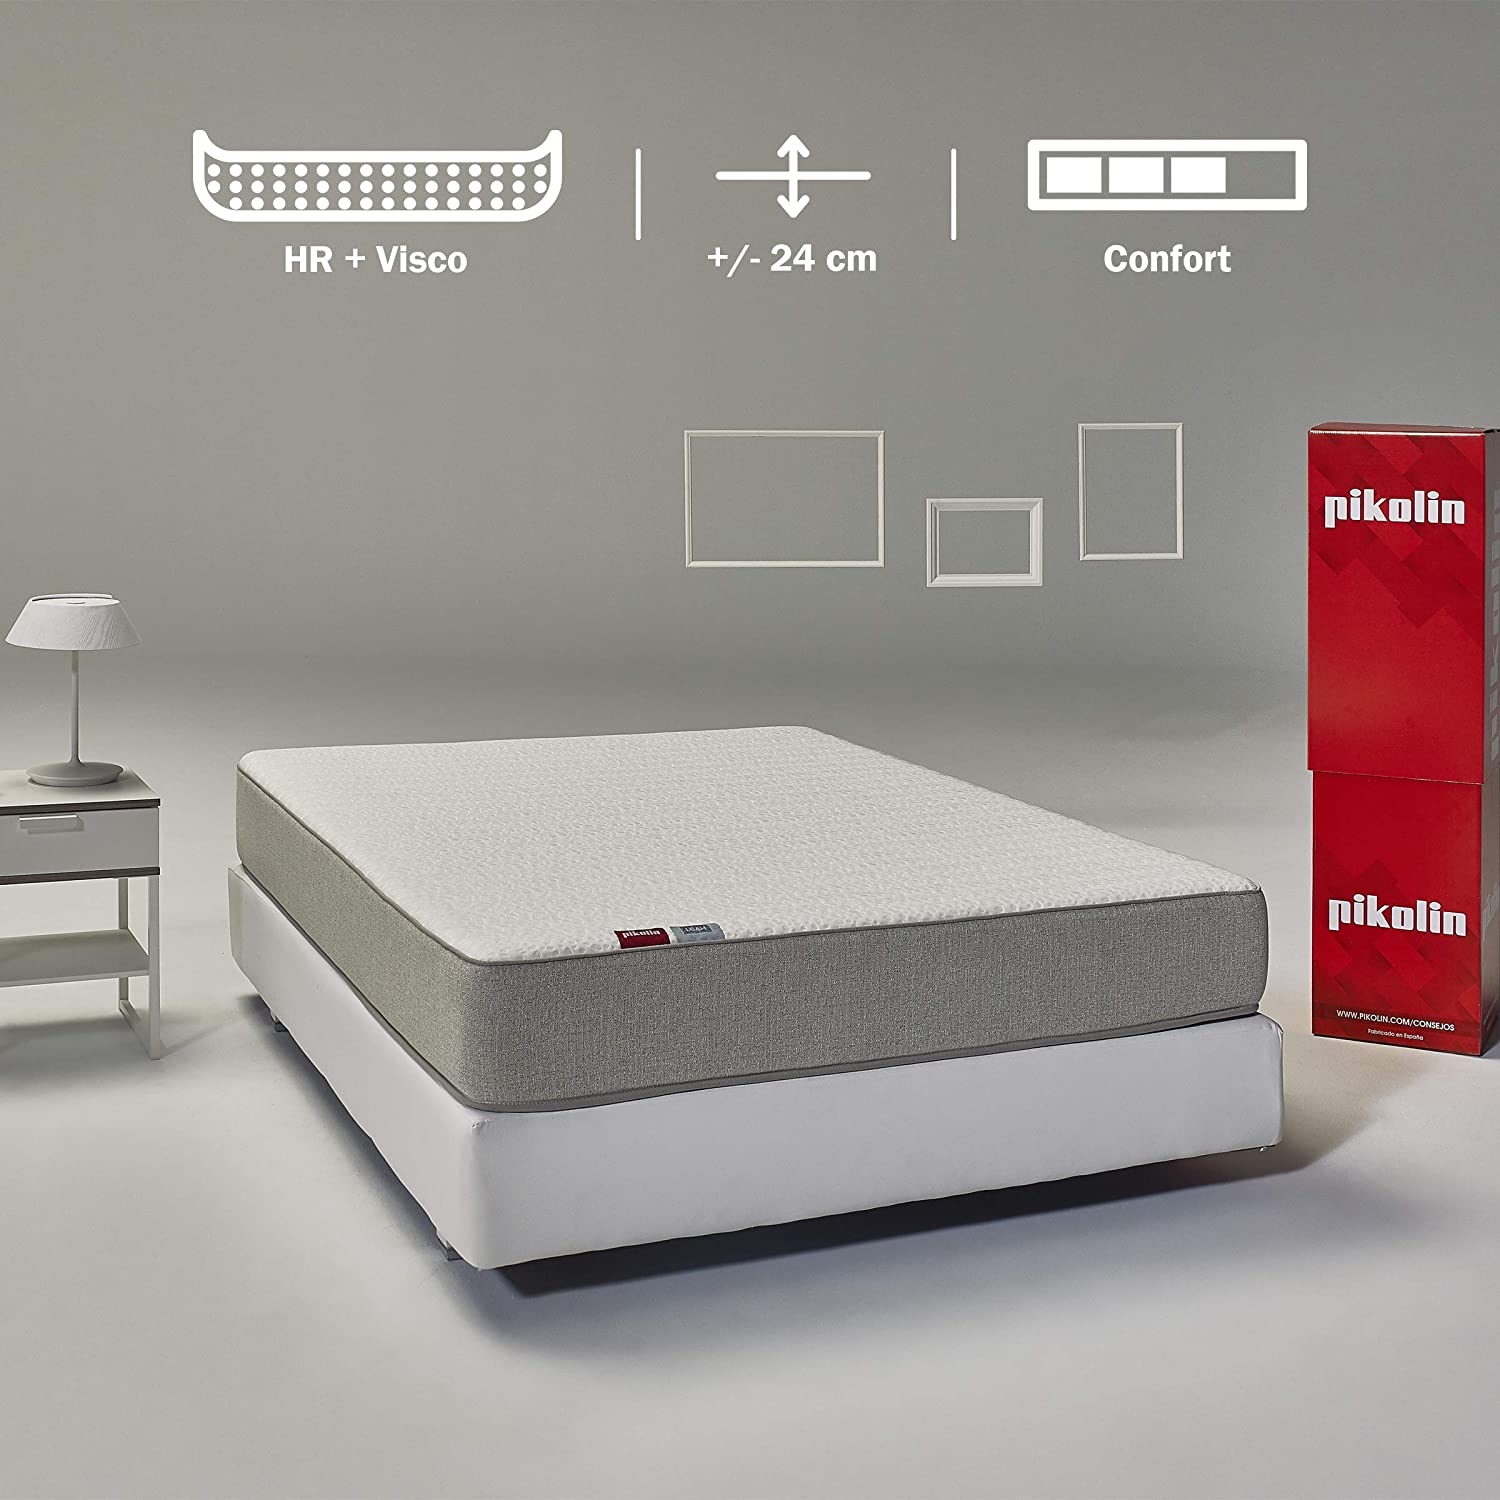 mattress-pikolin-leah-mattress-memory-elastic-and-hr-foam.jpg